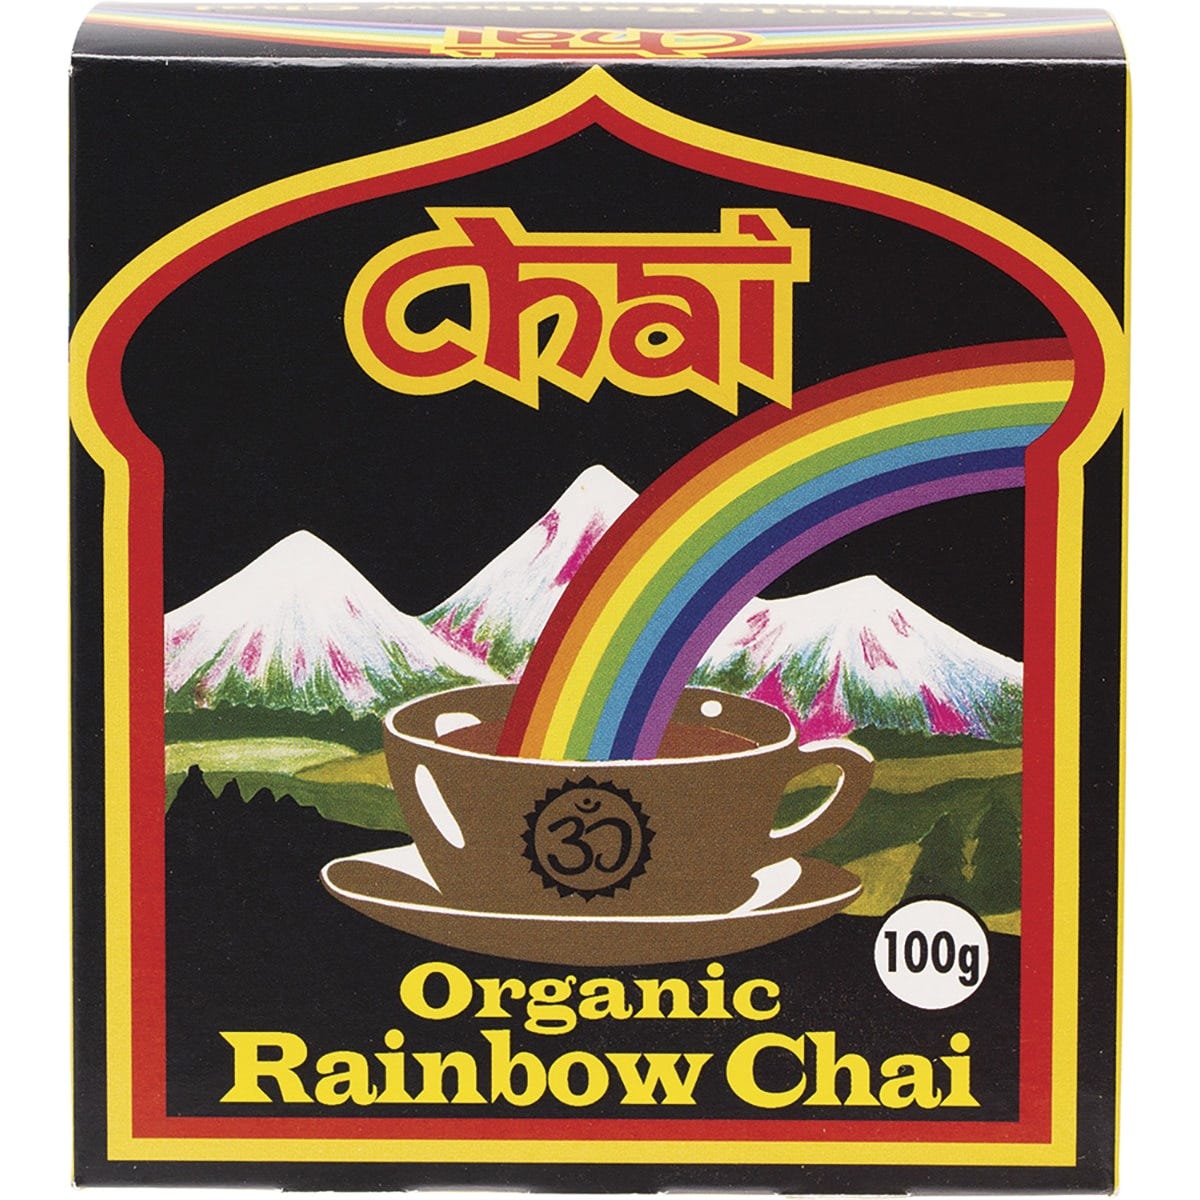 Chai Tea Organic Rainbow Chai 100g - Dr Earth - Drinks